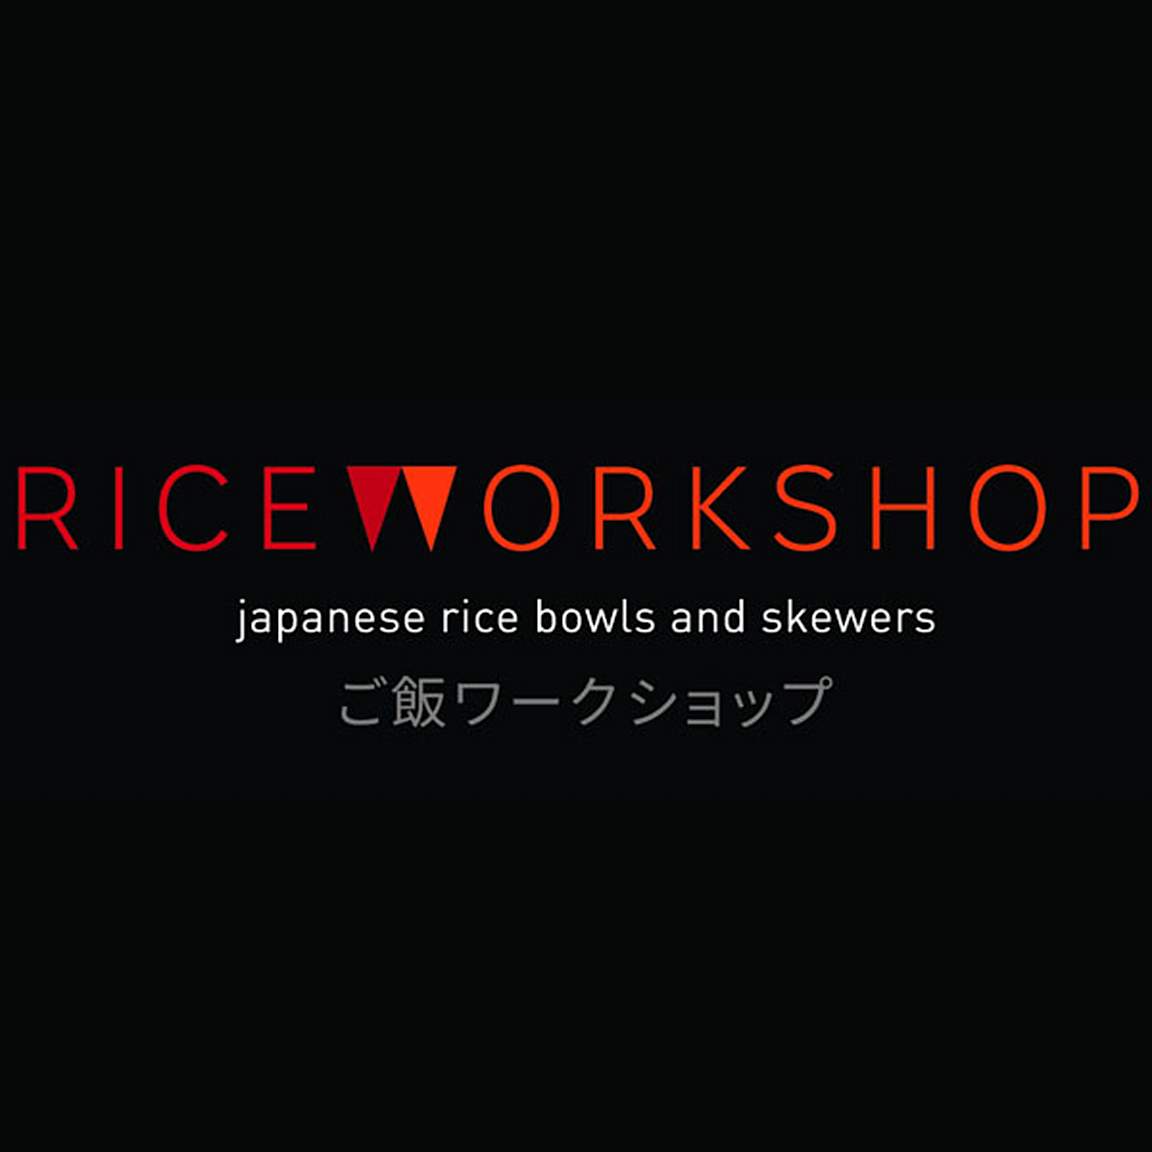 rice-workshop-logo